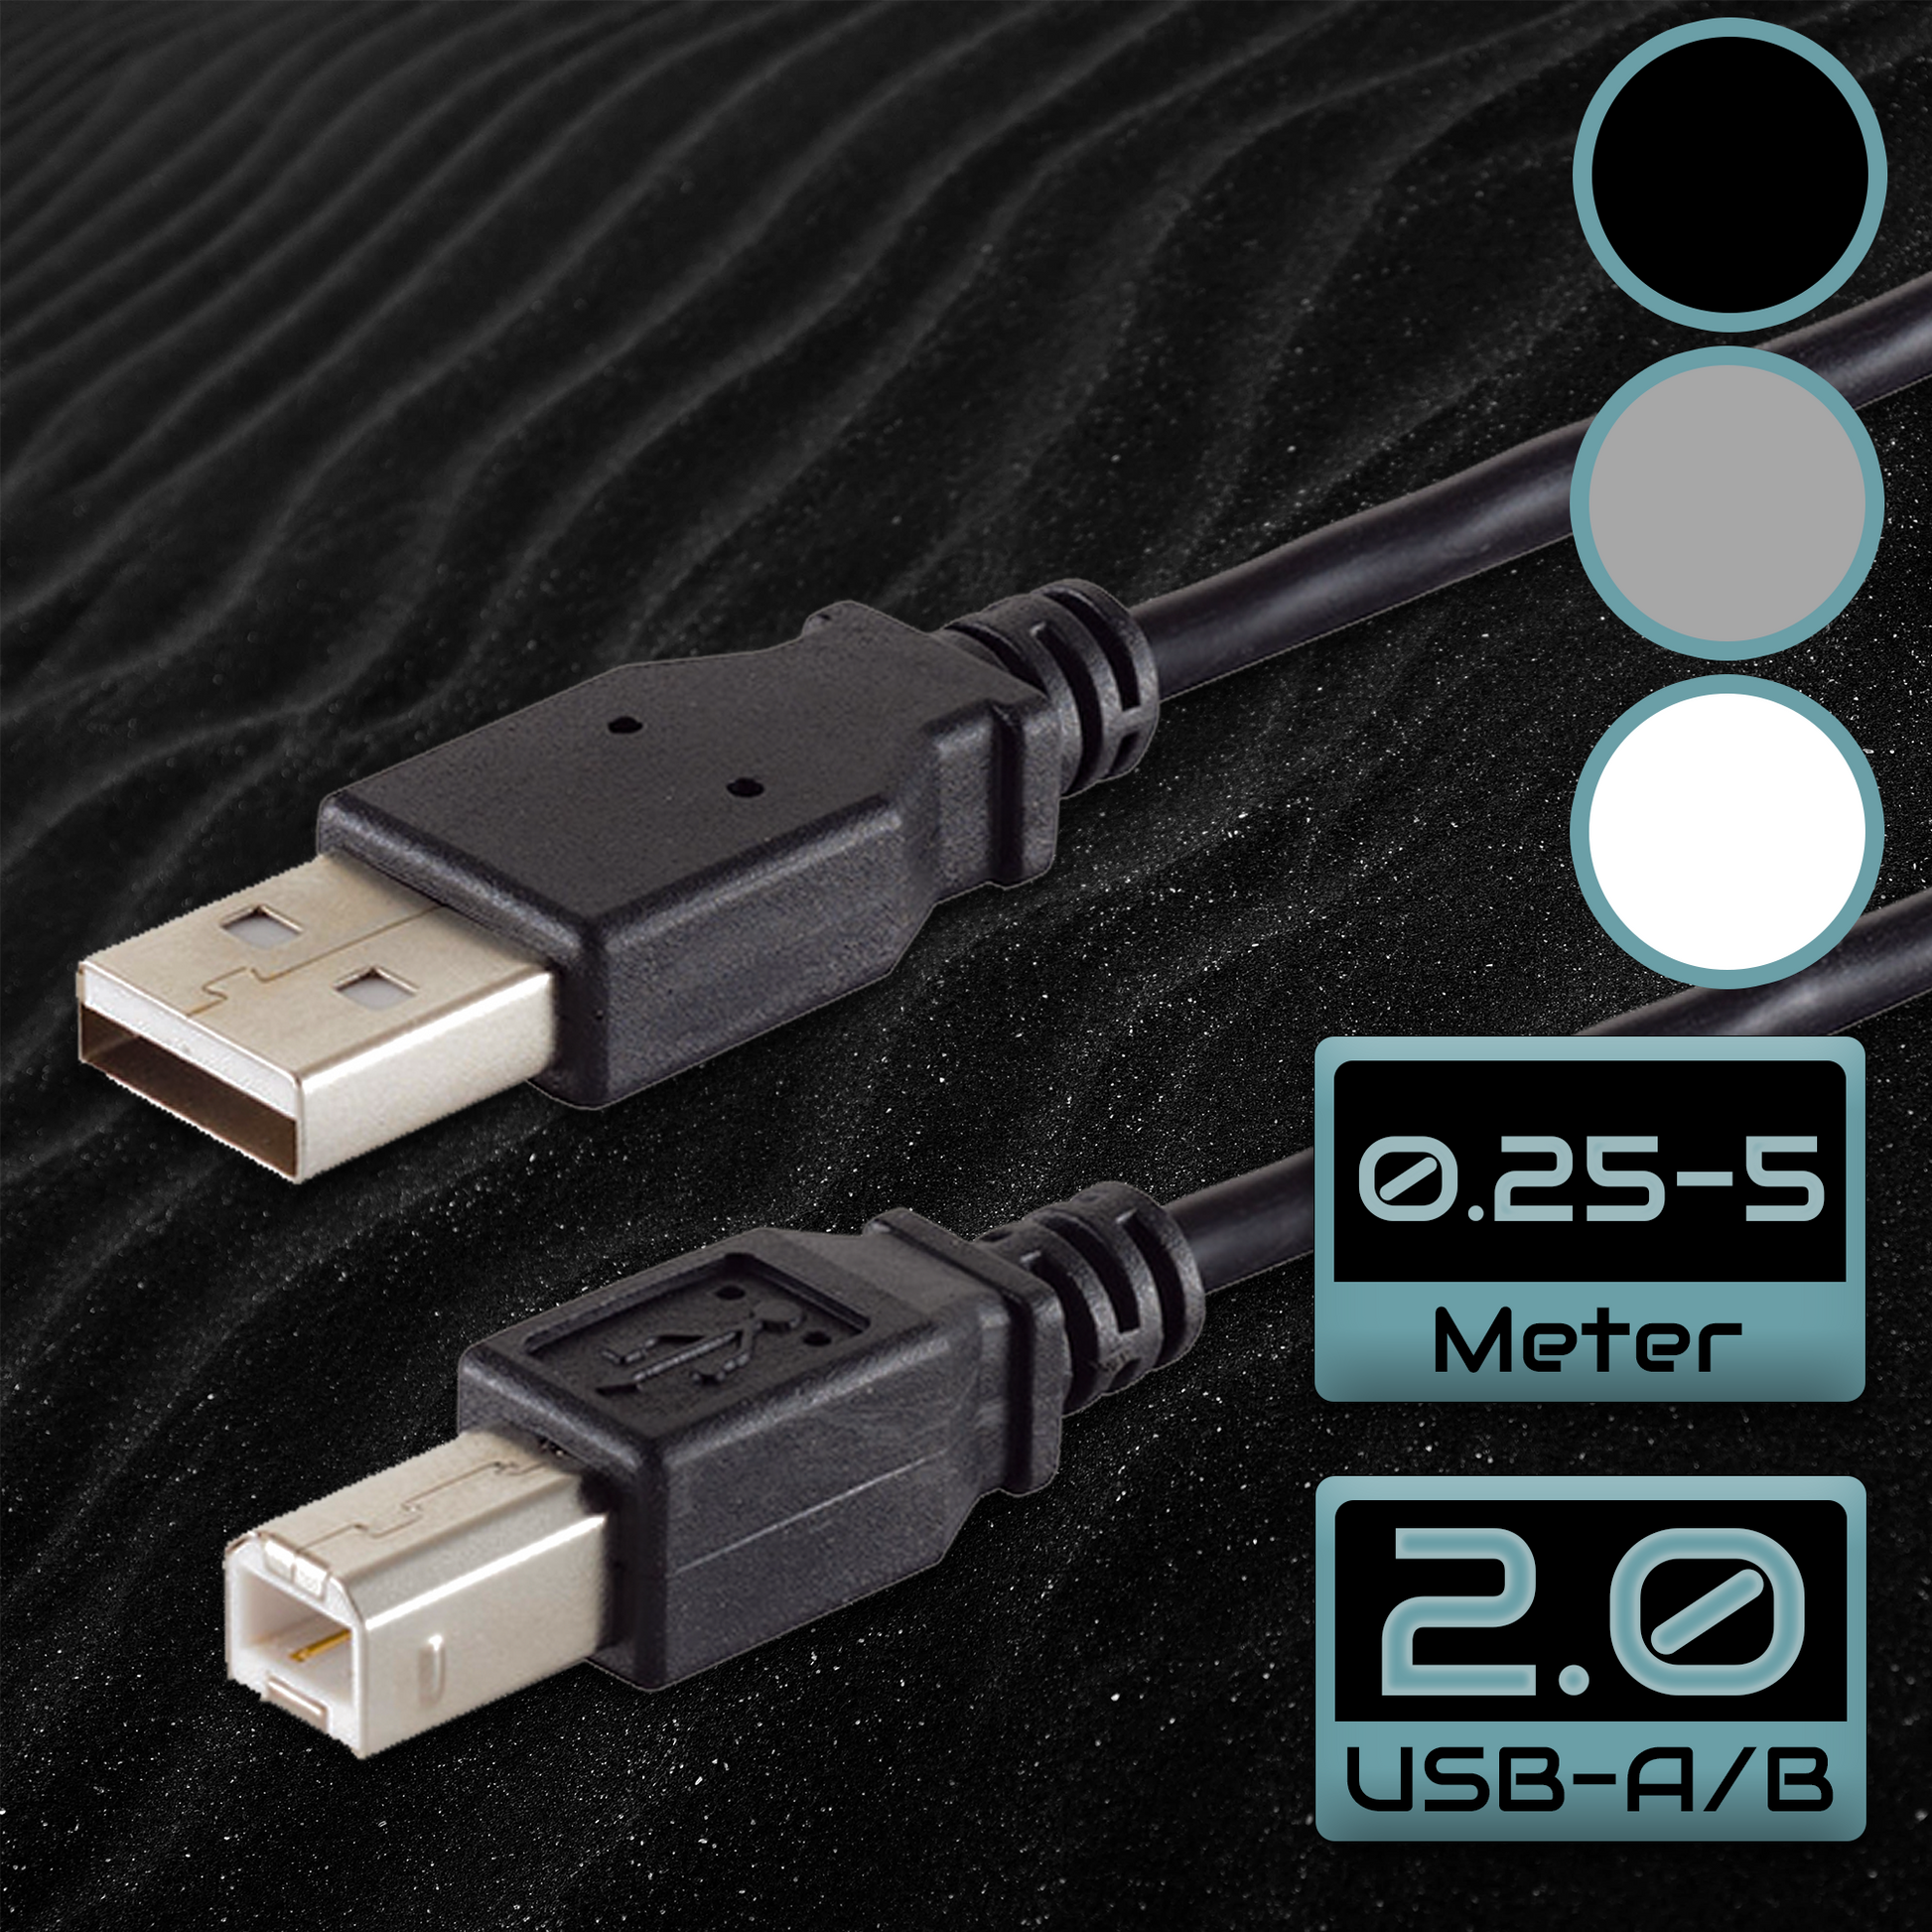 elements USB 2.0 A/B Kabel für Drucker, Scanner uvm. – KabelKevin